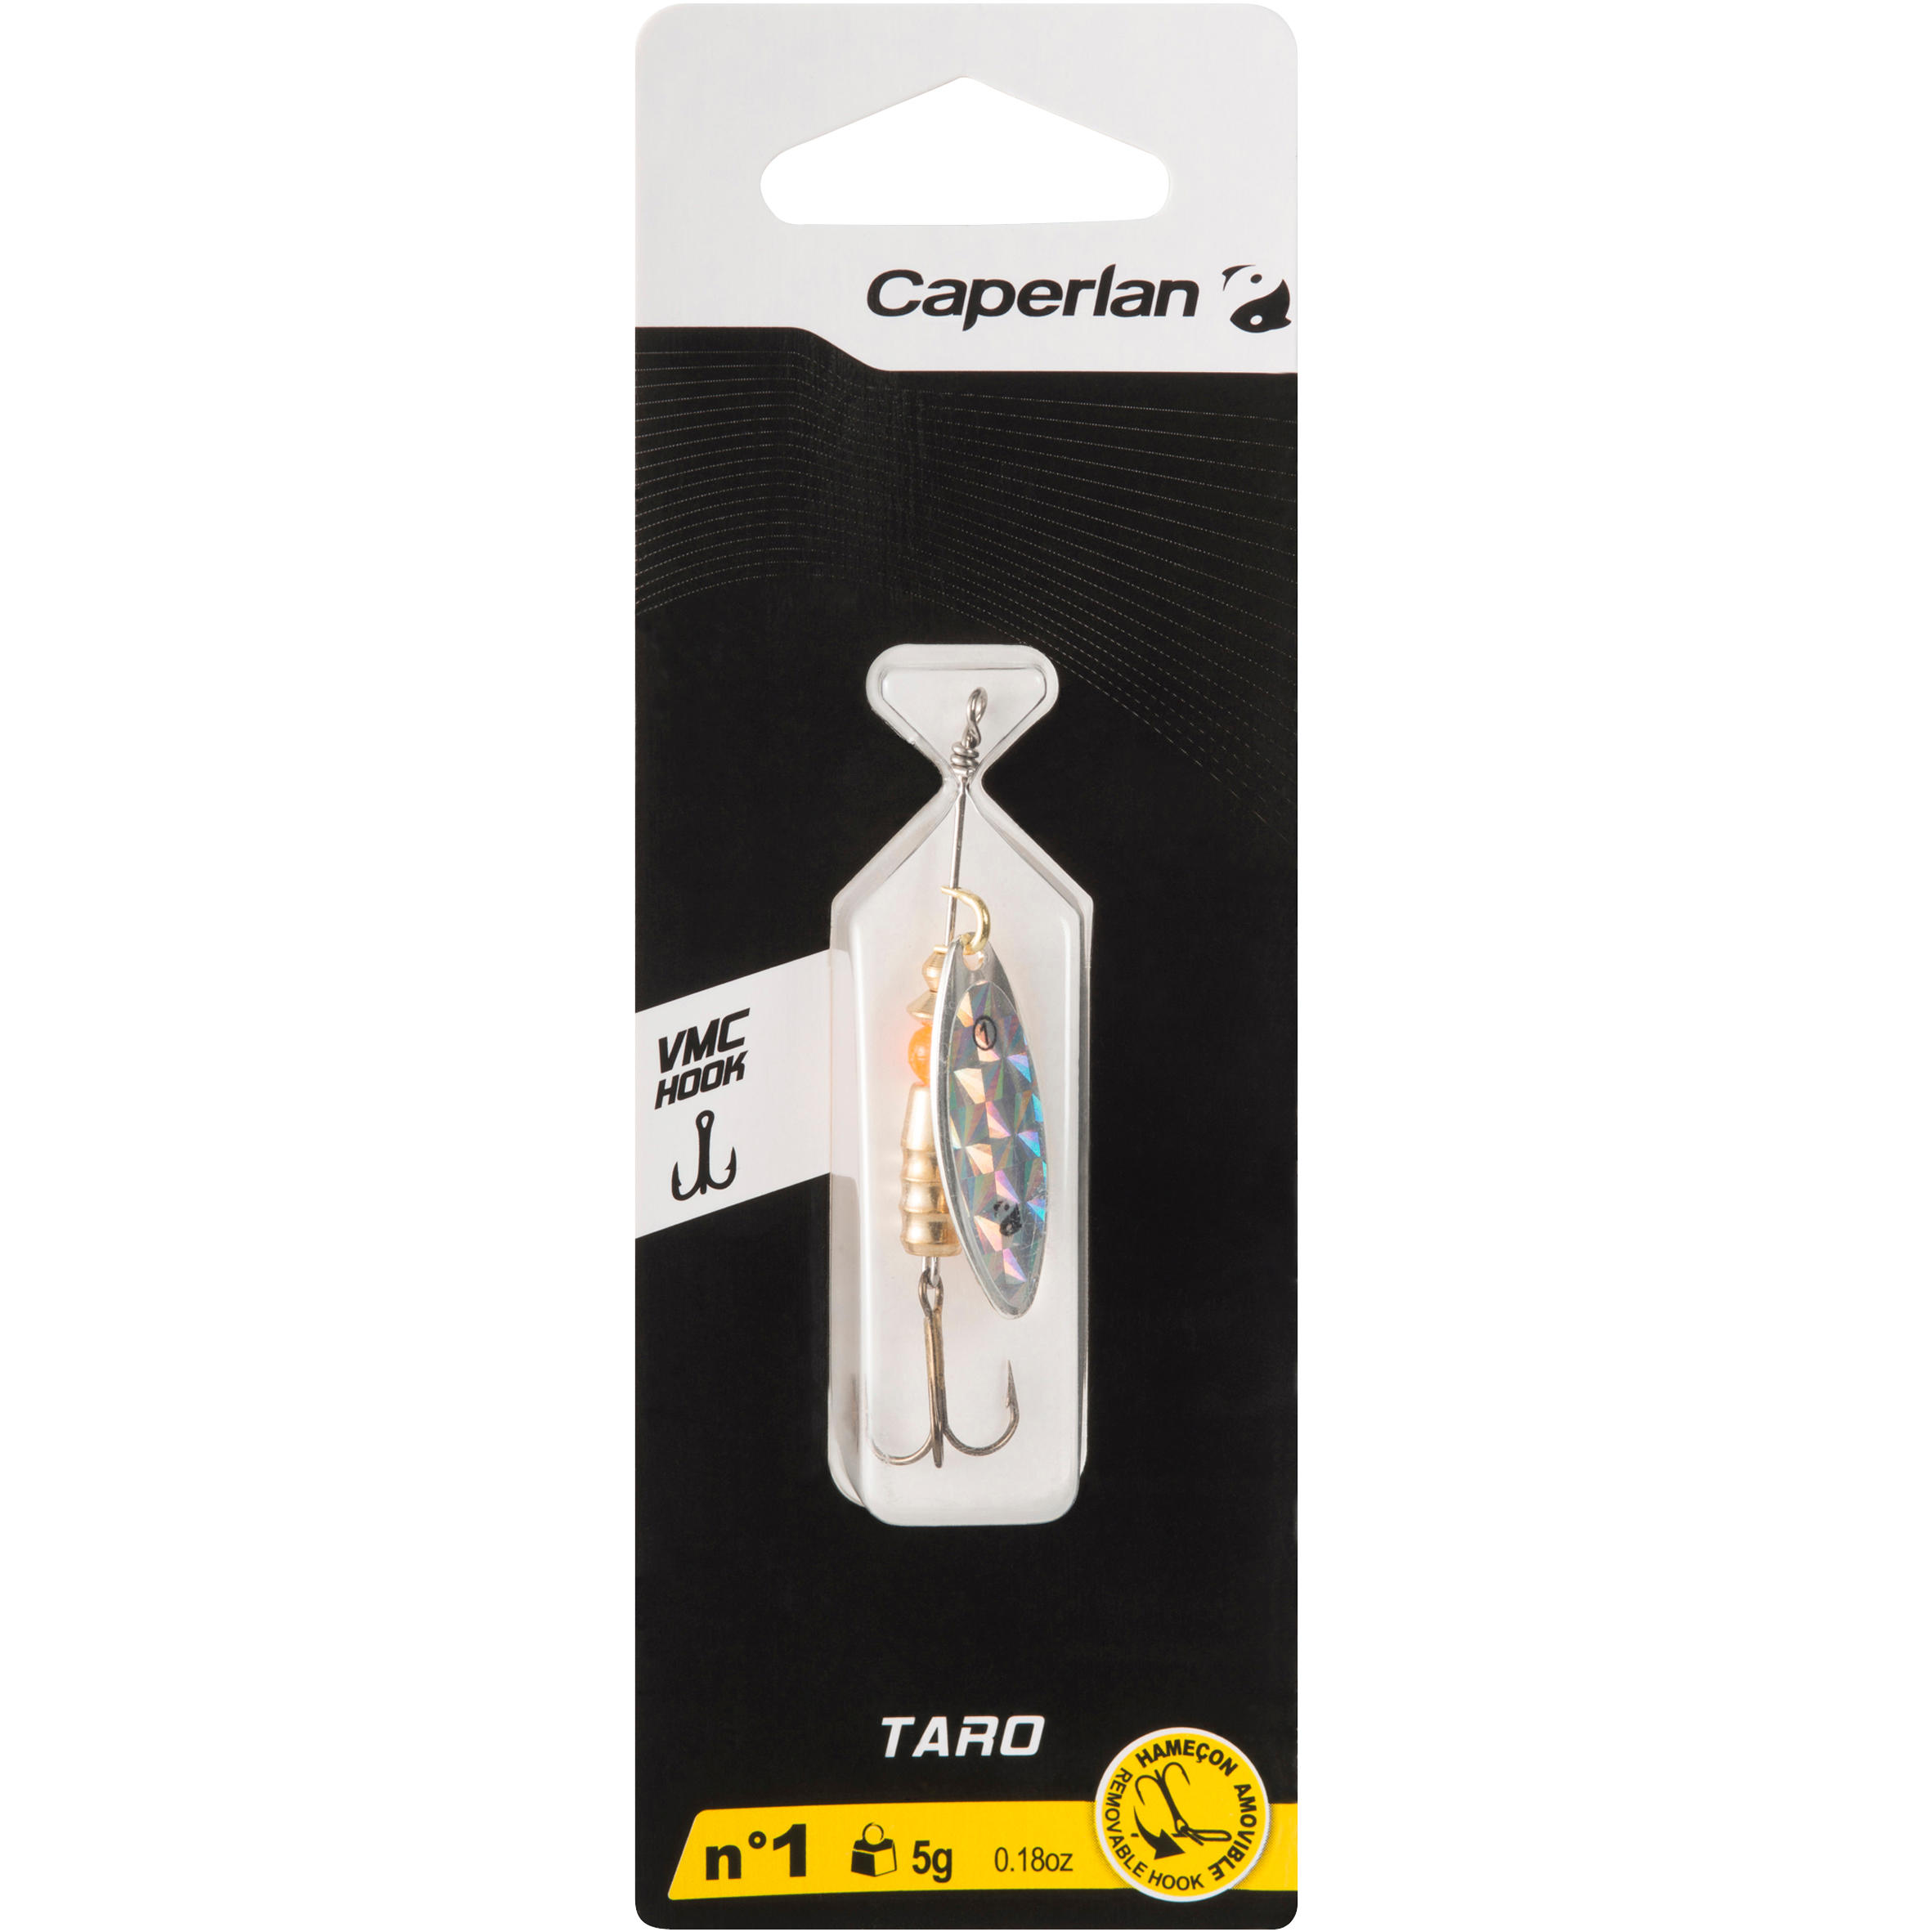 TARO #1 HOLOGRAPHIC PREDATOR FISHING SPINNER - CAPERLAN